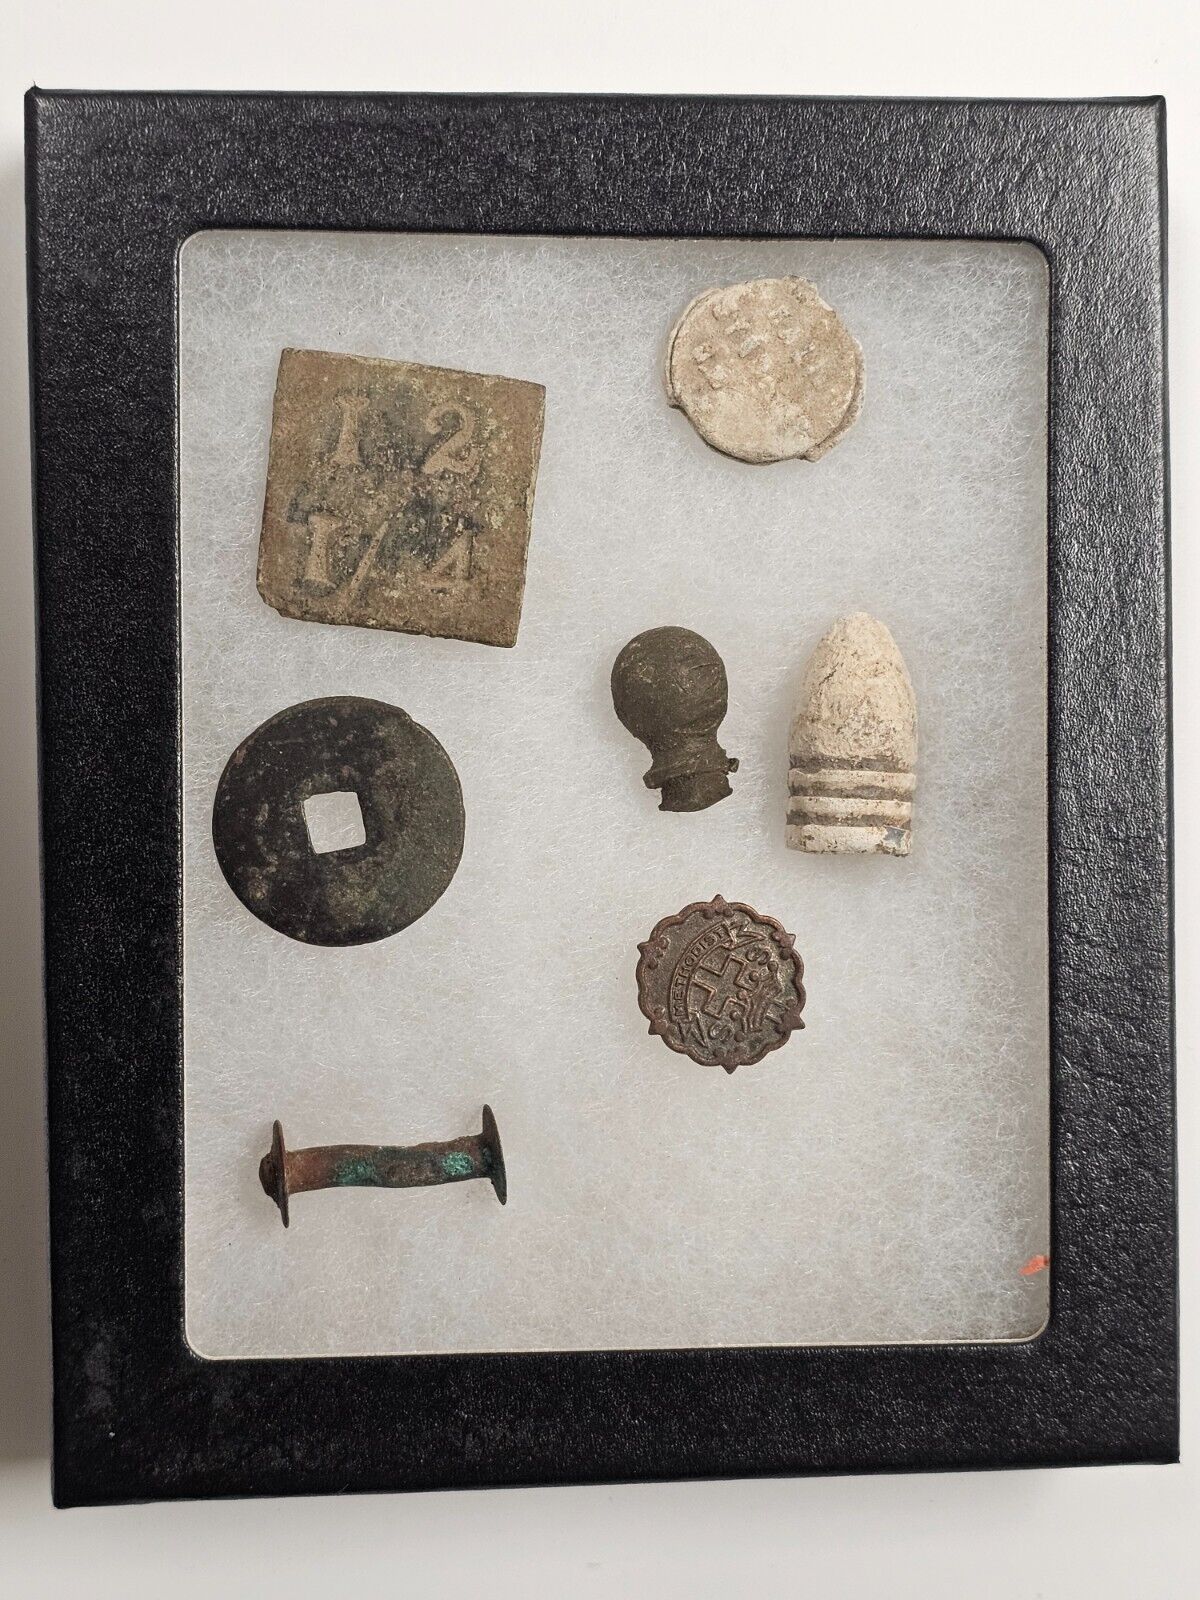 Dug Metal Detecting Finds - Relics